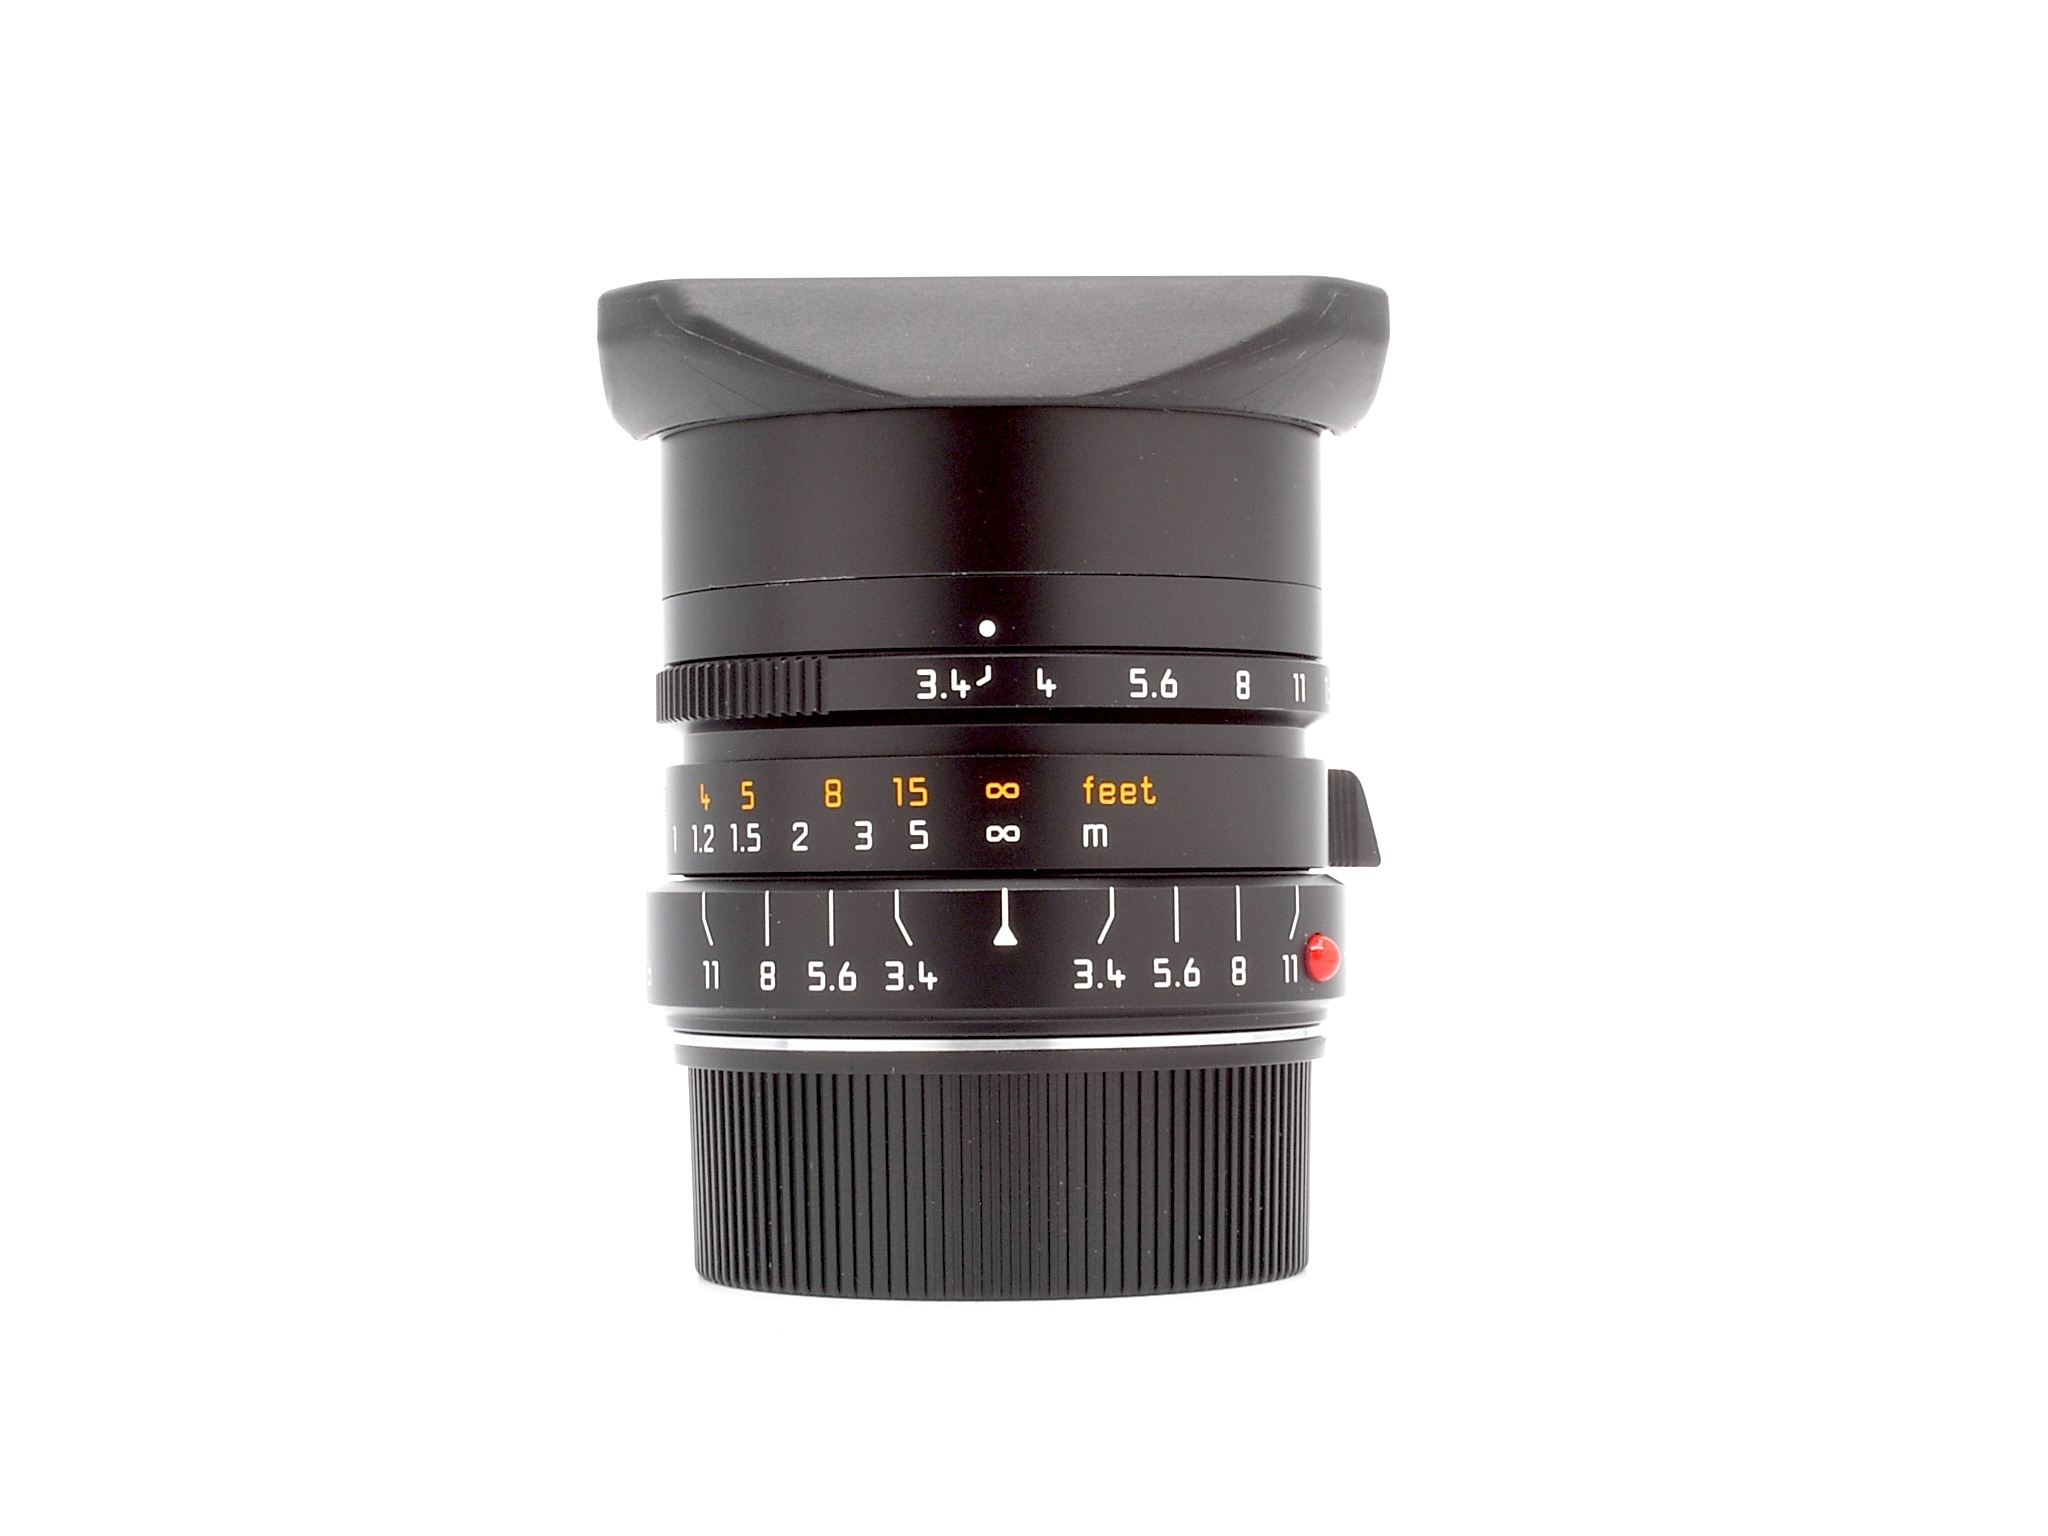 Leica Super-Elmar-M 3.4/21mm ASPH., black 6Bit